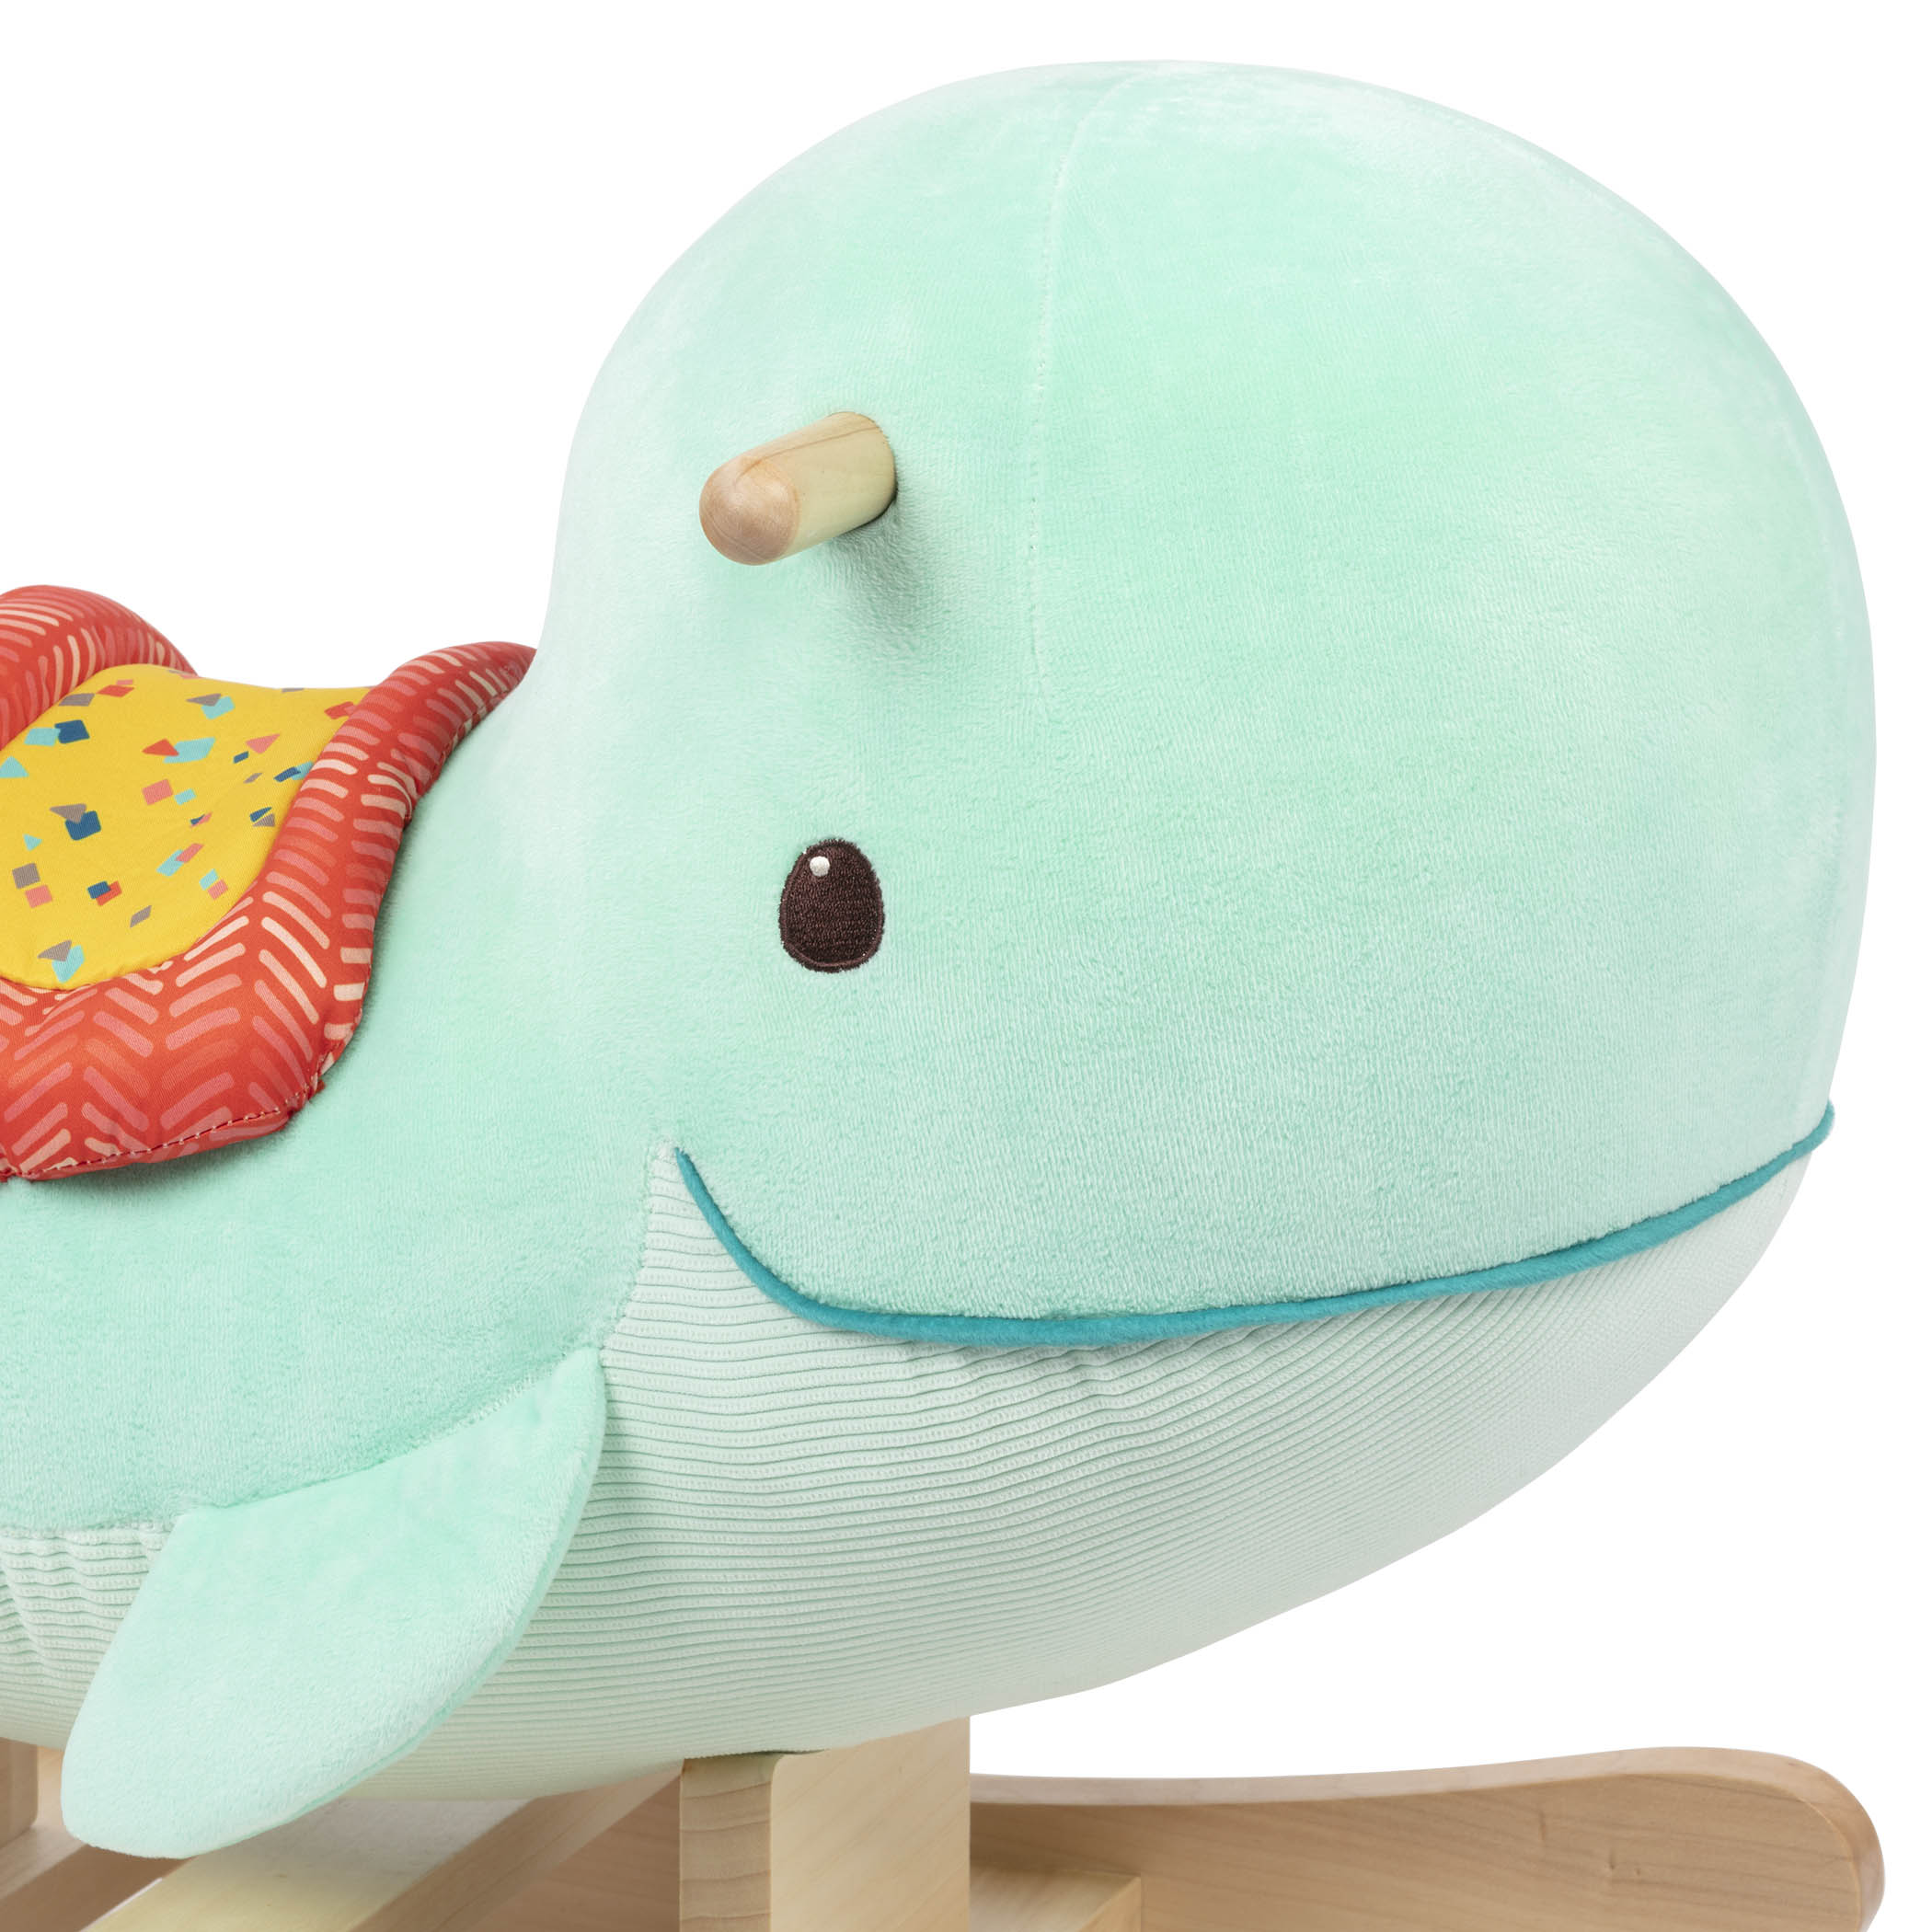 B.toys, B. Whale Rocker – Echo – pluszowy wieloryb na biegunach